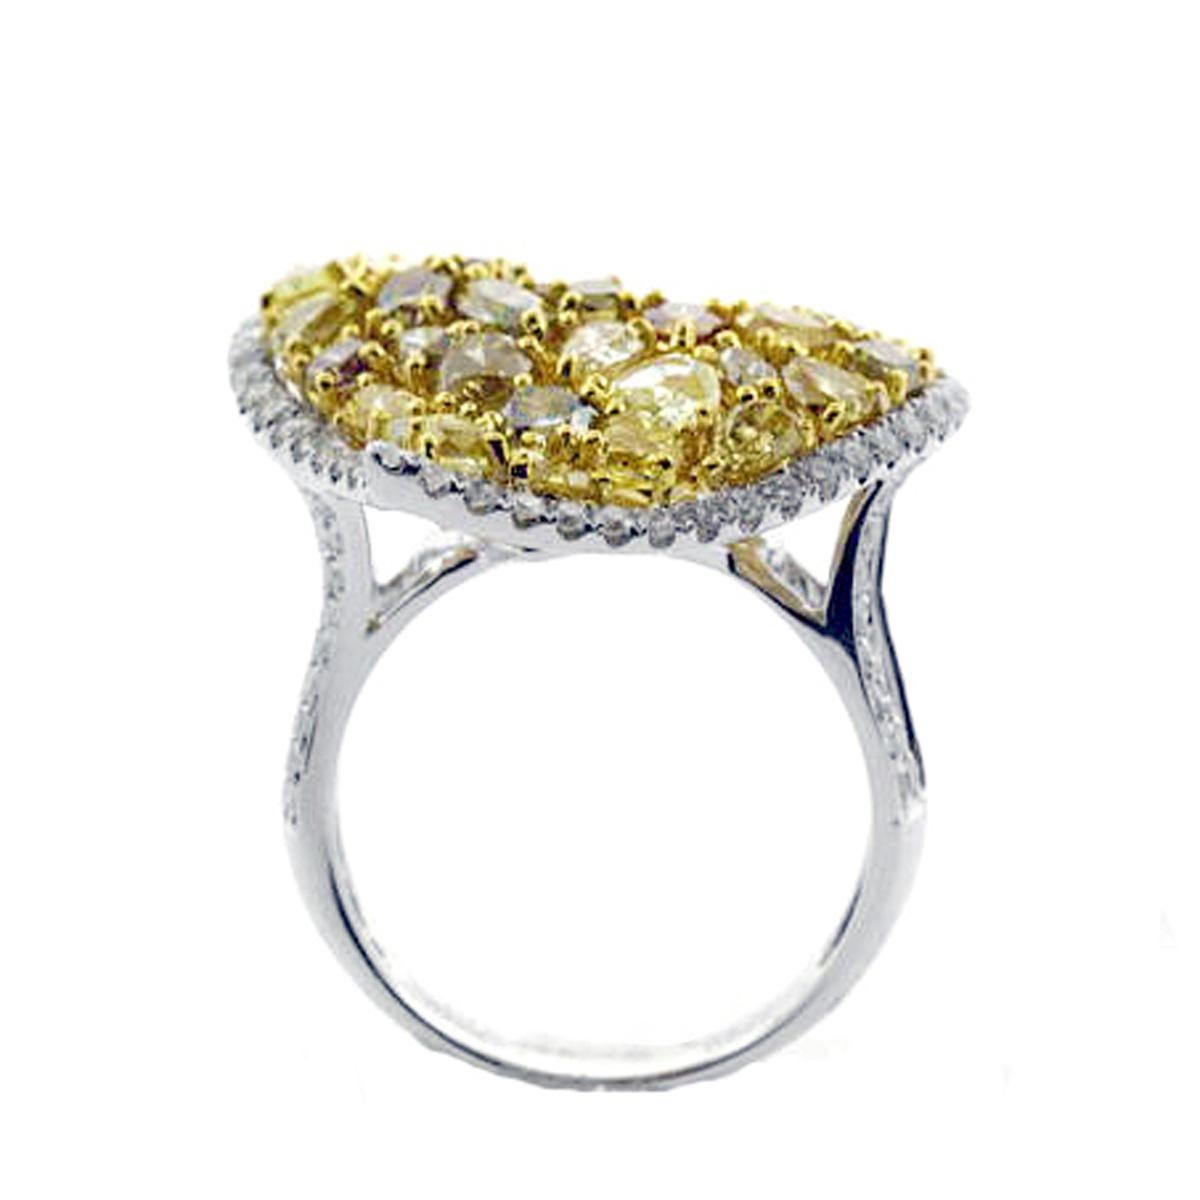 Contemporary 4.81 Carat Natural Fancy Multi-Color Mixed Cut Diamond Heart Shape Ring